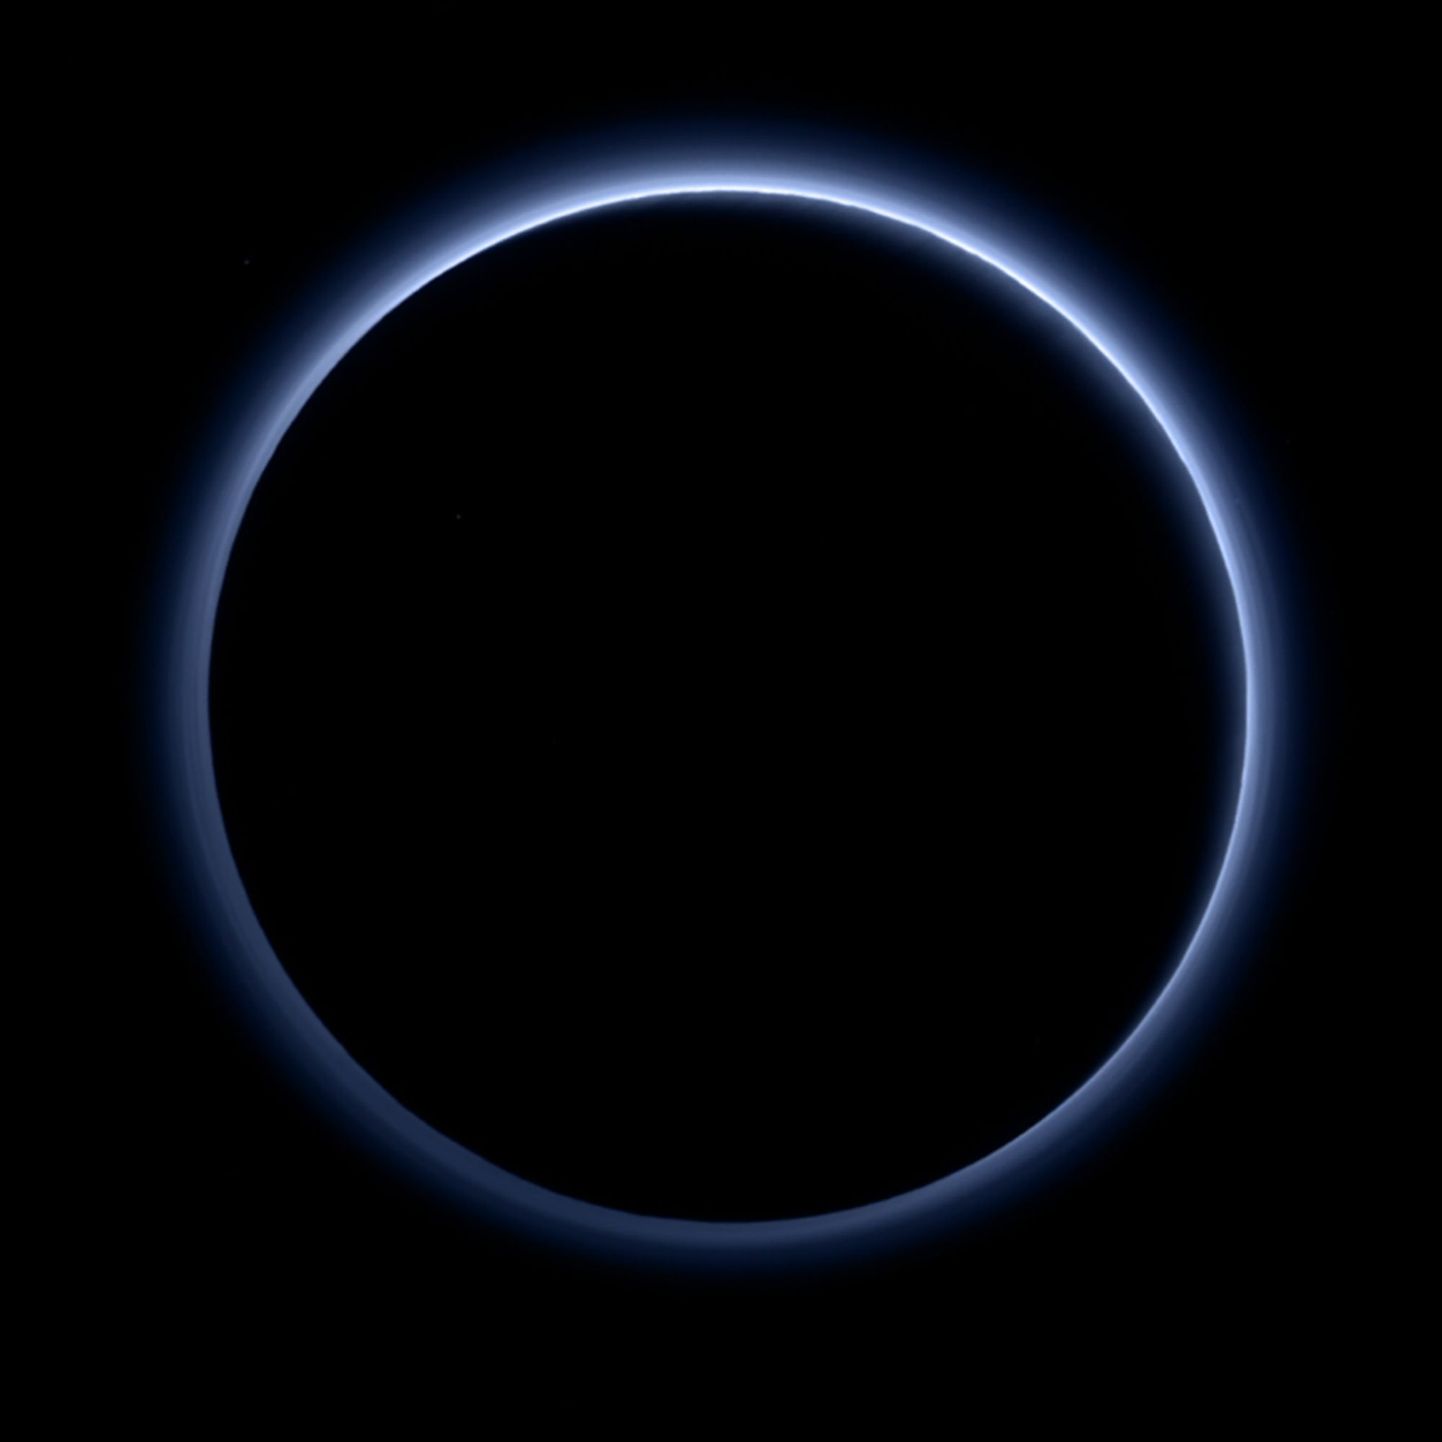 Pluutot ümbritsev sinine häguatmosfäär